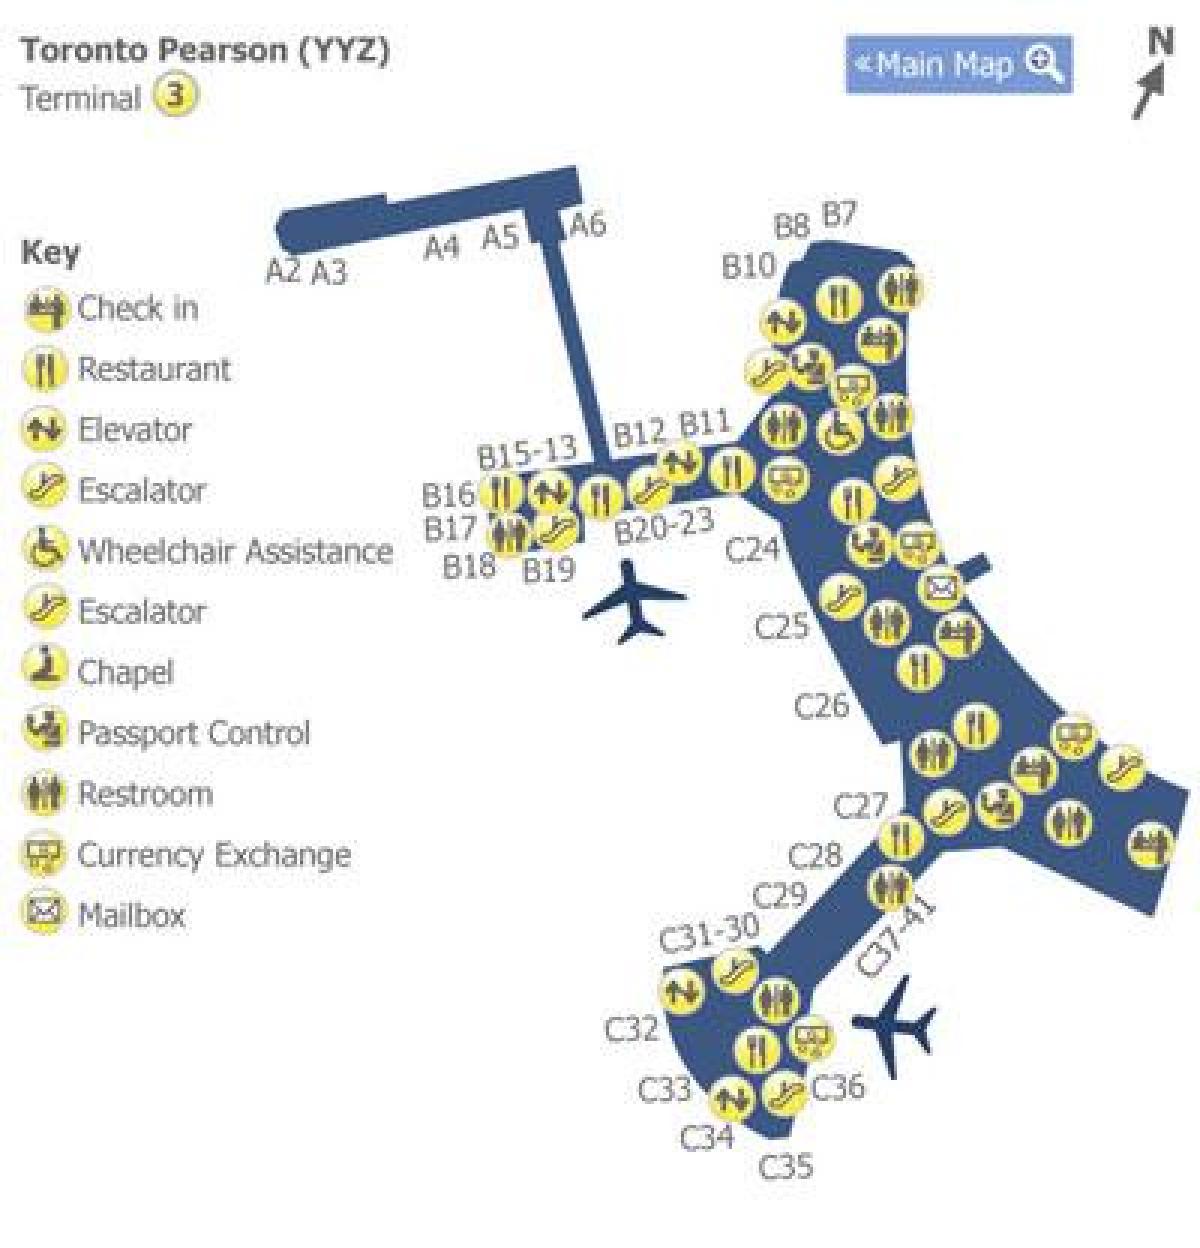 Peta Toronto Pearson terminal lapangan terbang 3